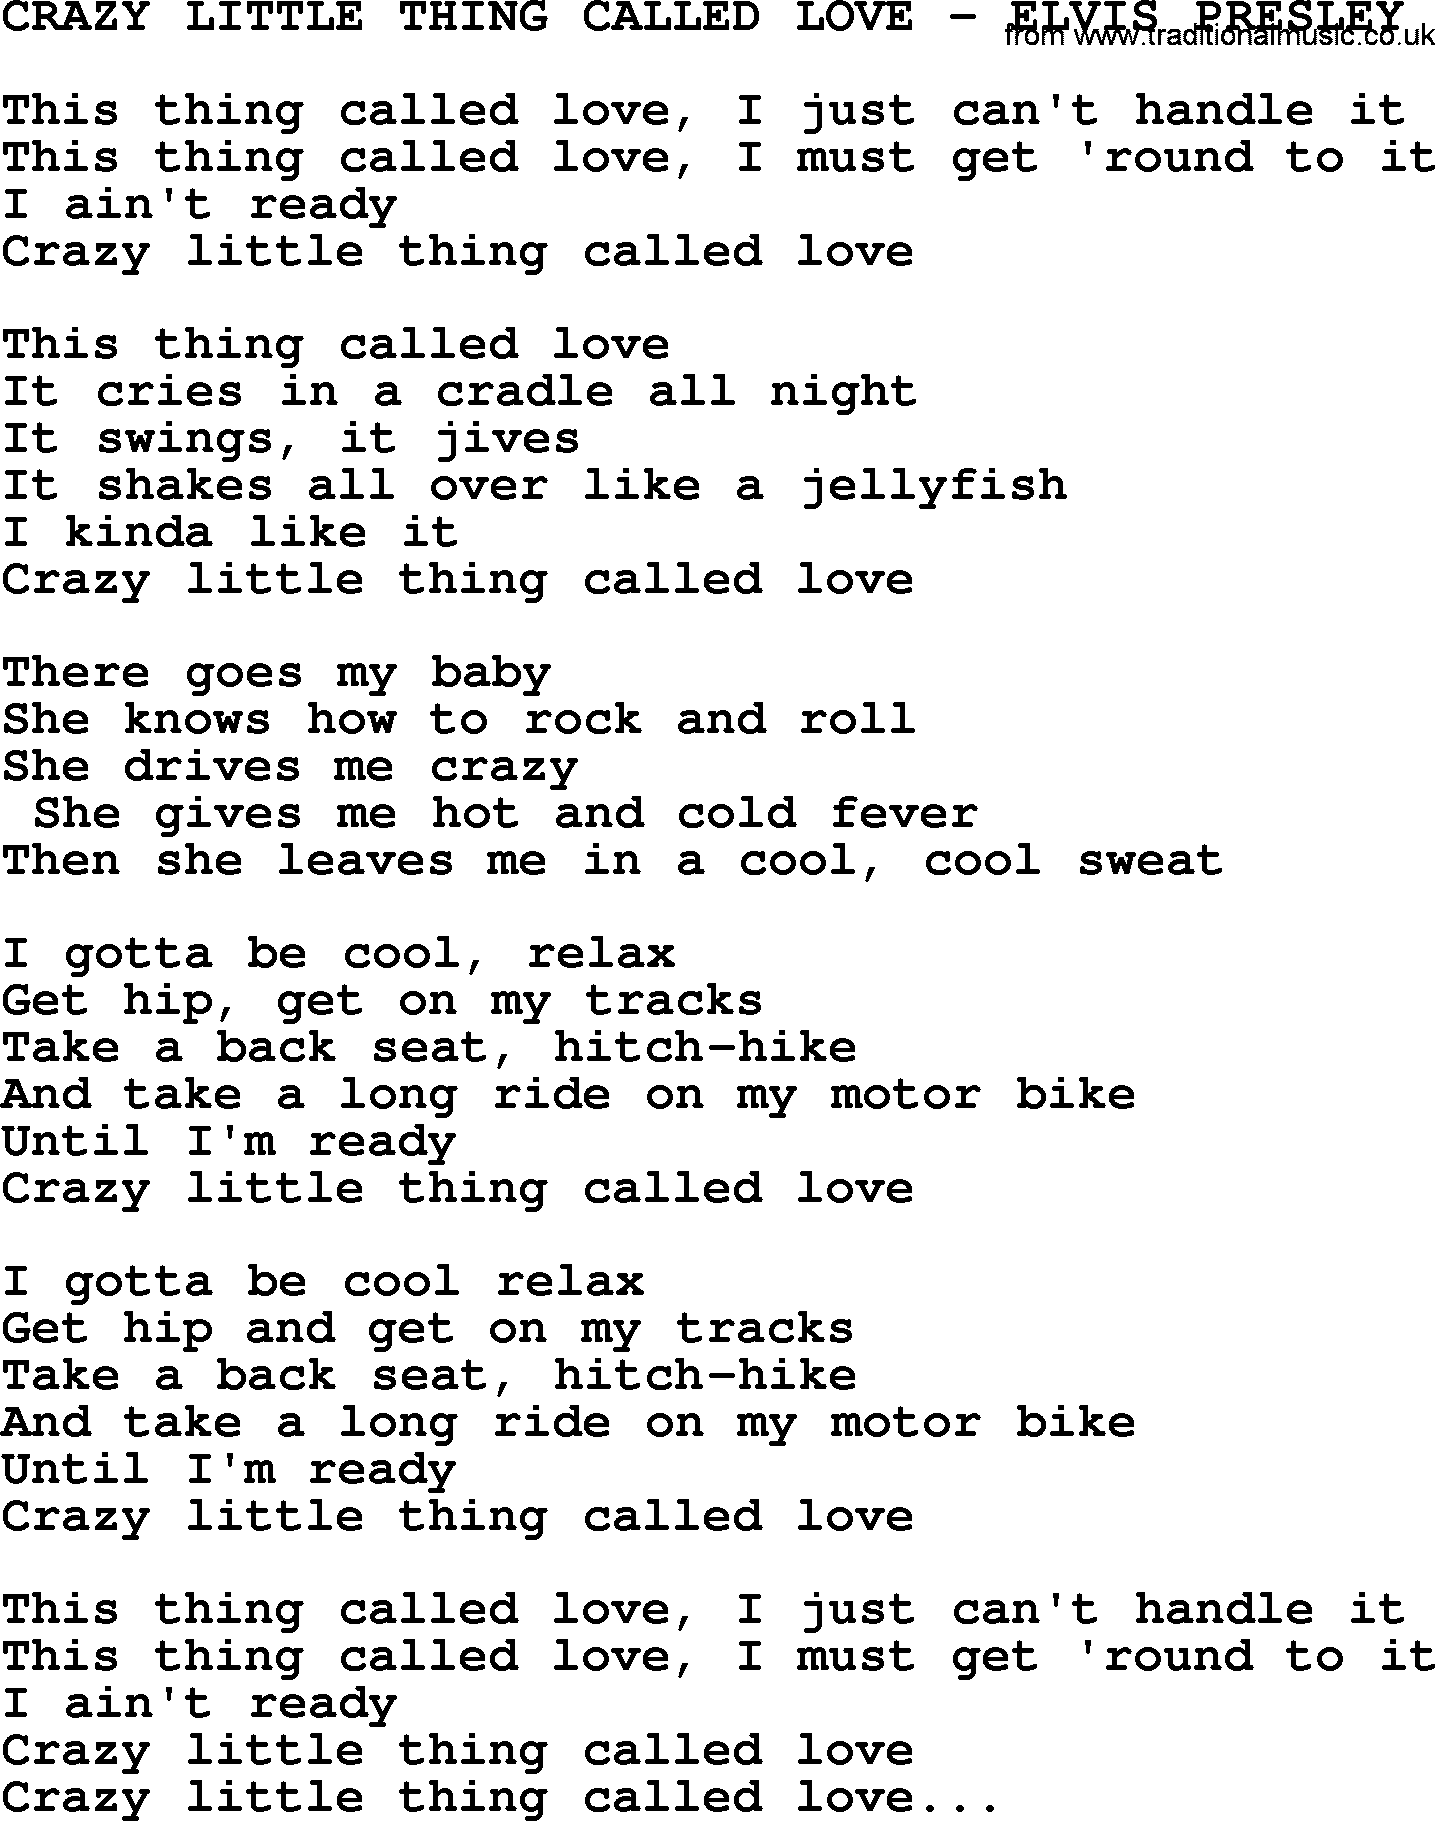 Elvis Presley song: Crazy Little Thing Called Love-Elvis Presley-.txt lyrics and chords